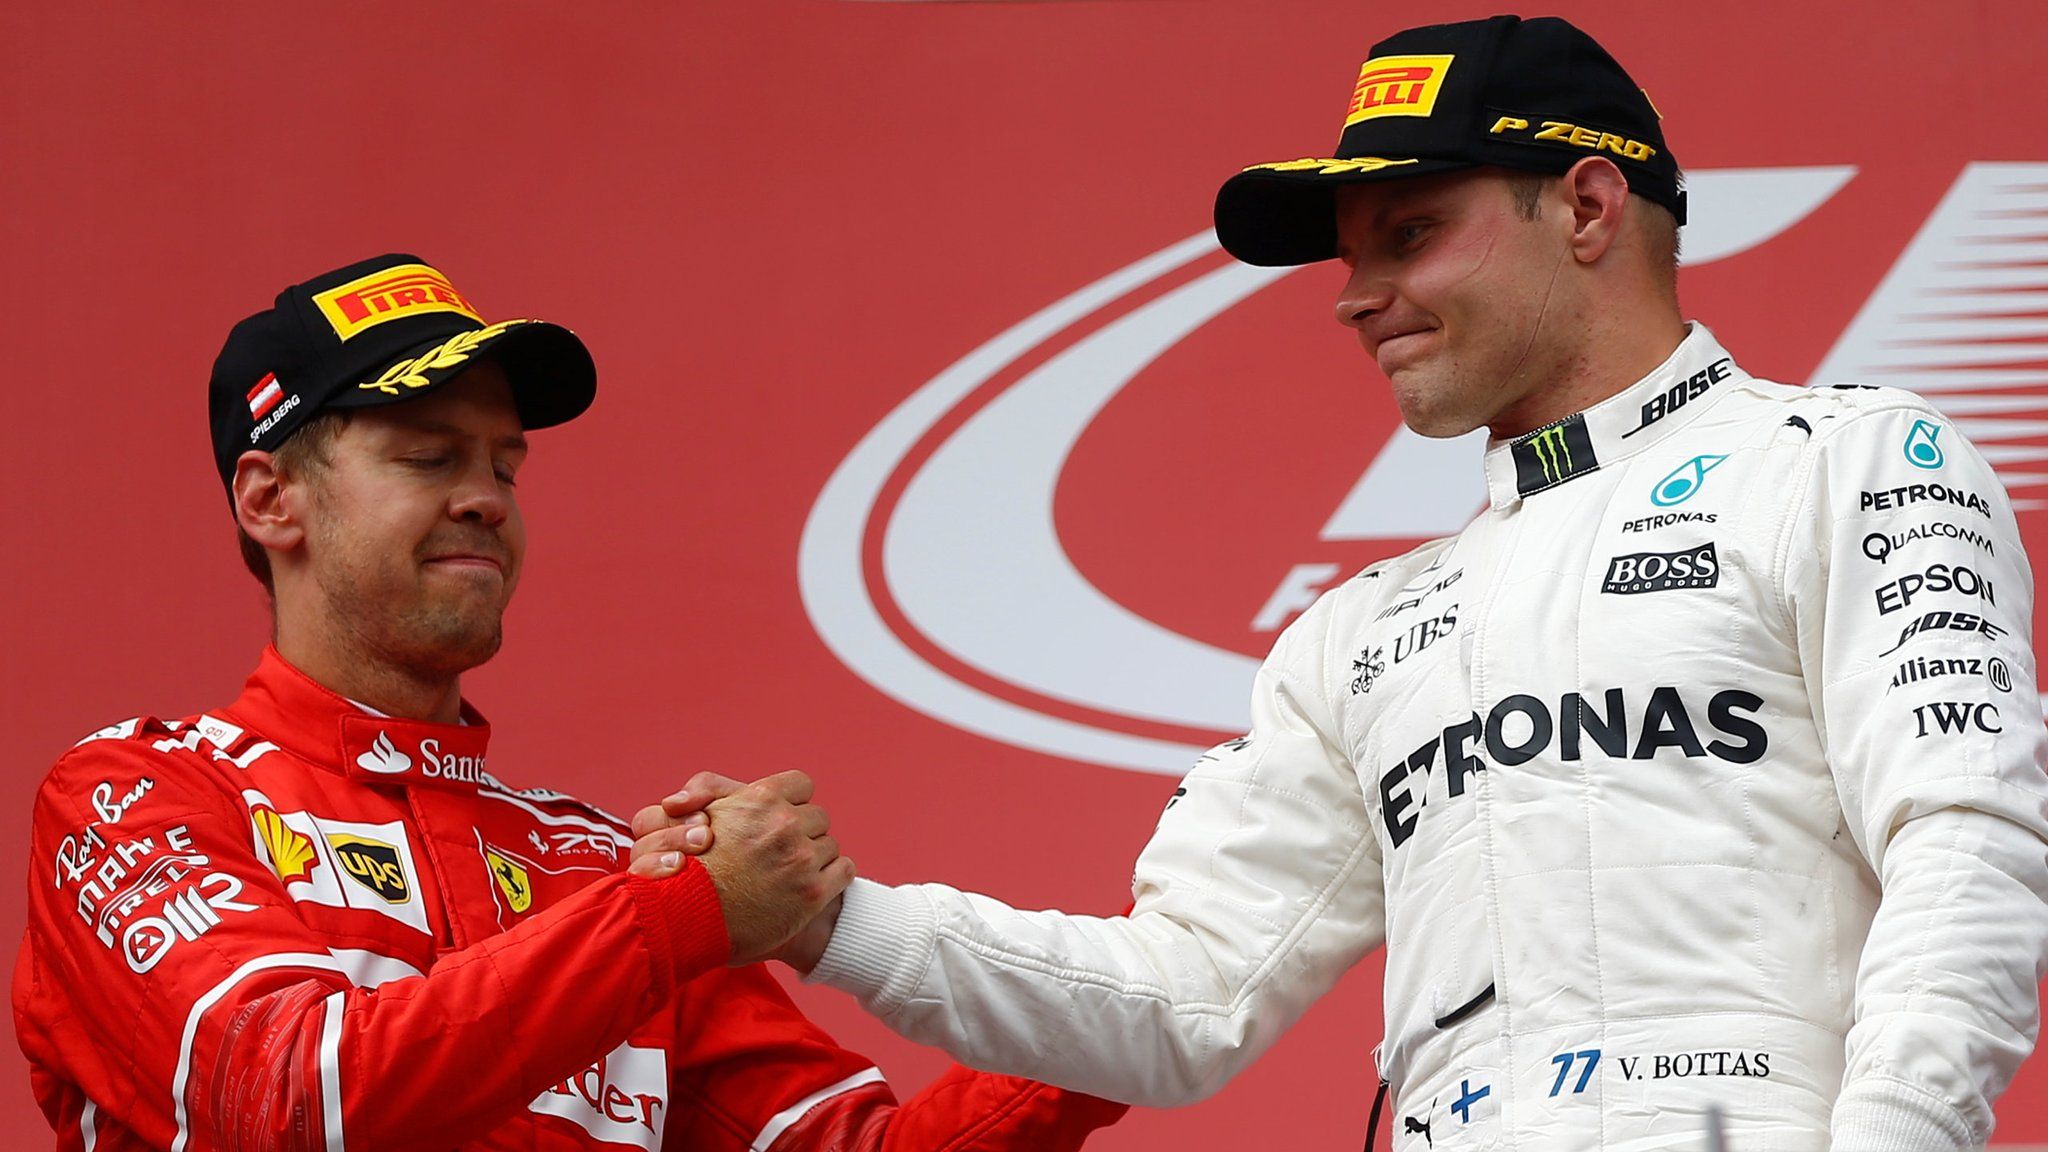 Valtteri Bottas and Sebastian Vettel on the podium